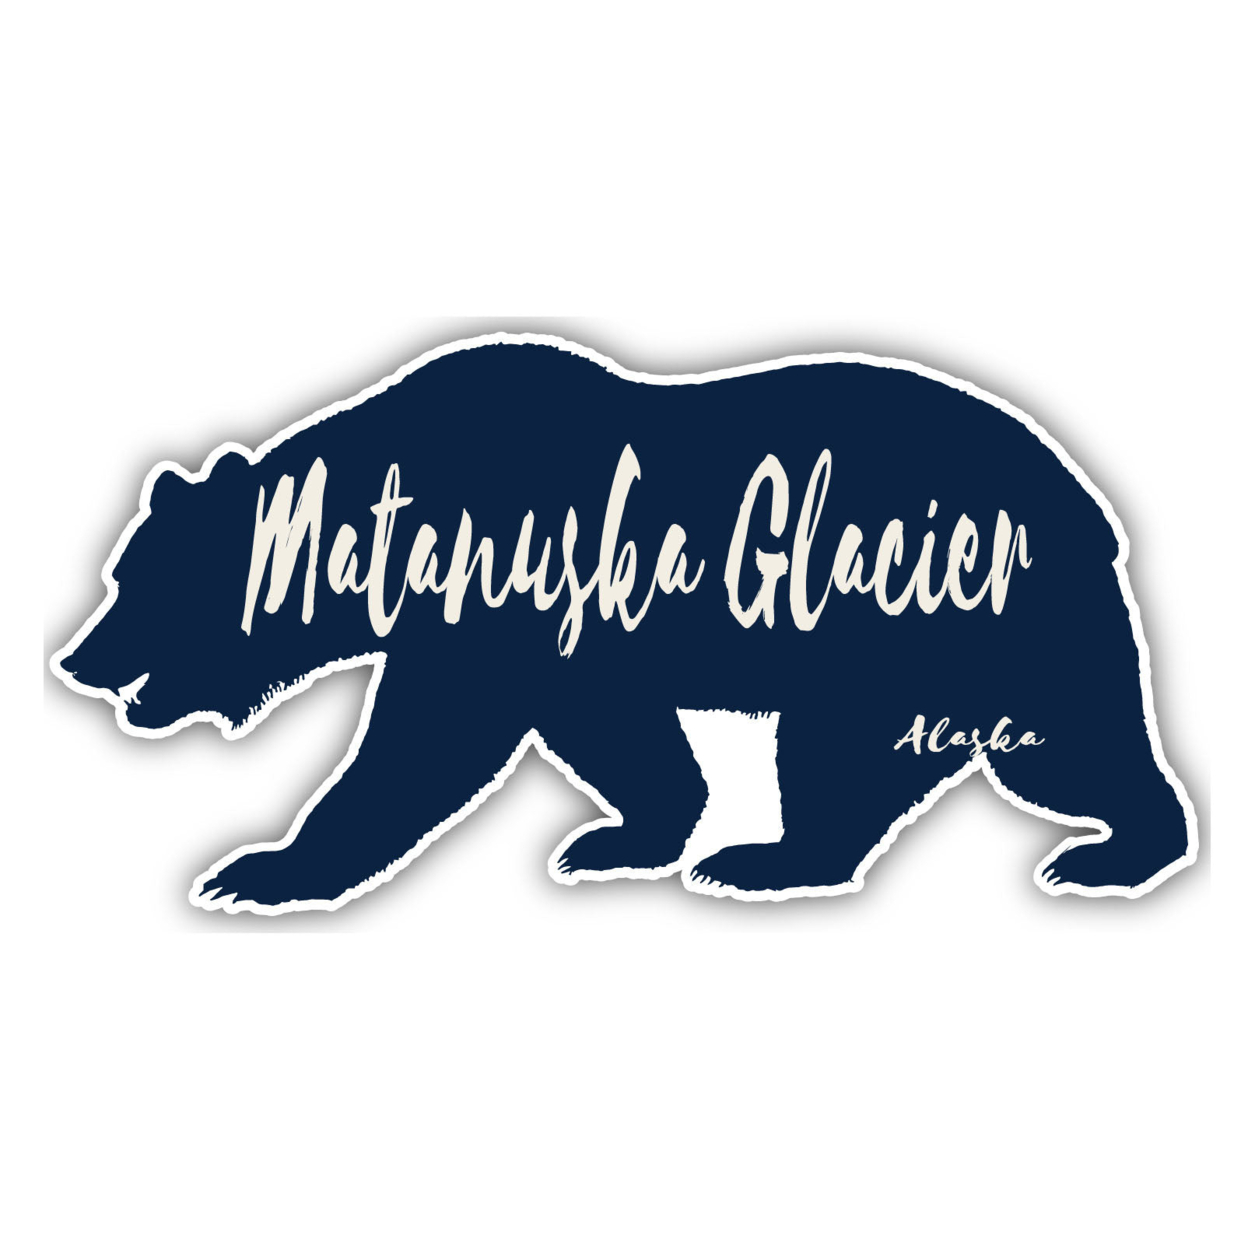 Matanuska Glacier Alaska Souvenir Decorative Stickers (Choose Theme And Size) - 4-Inch, Tent